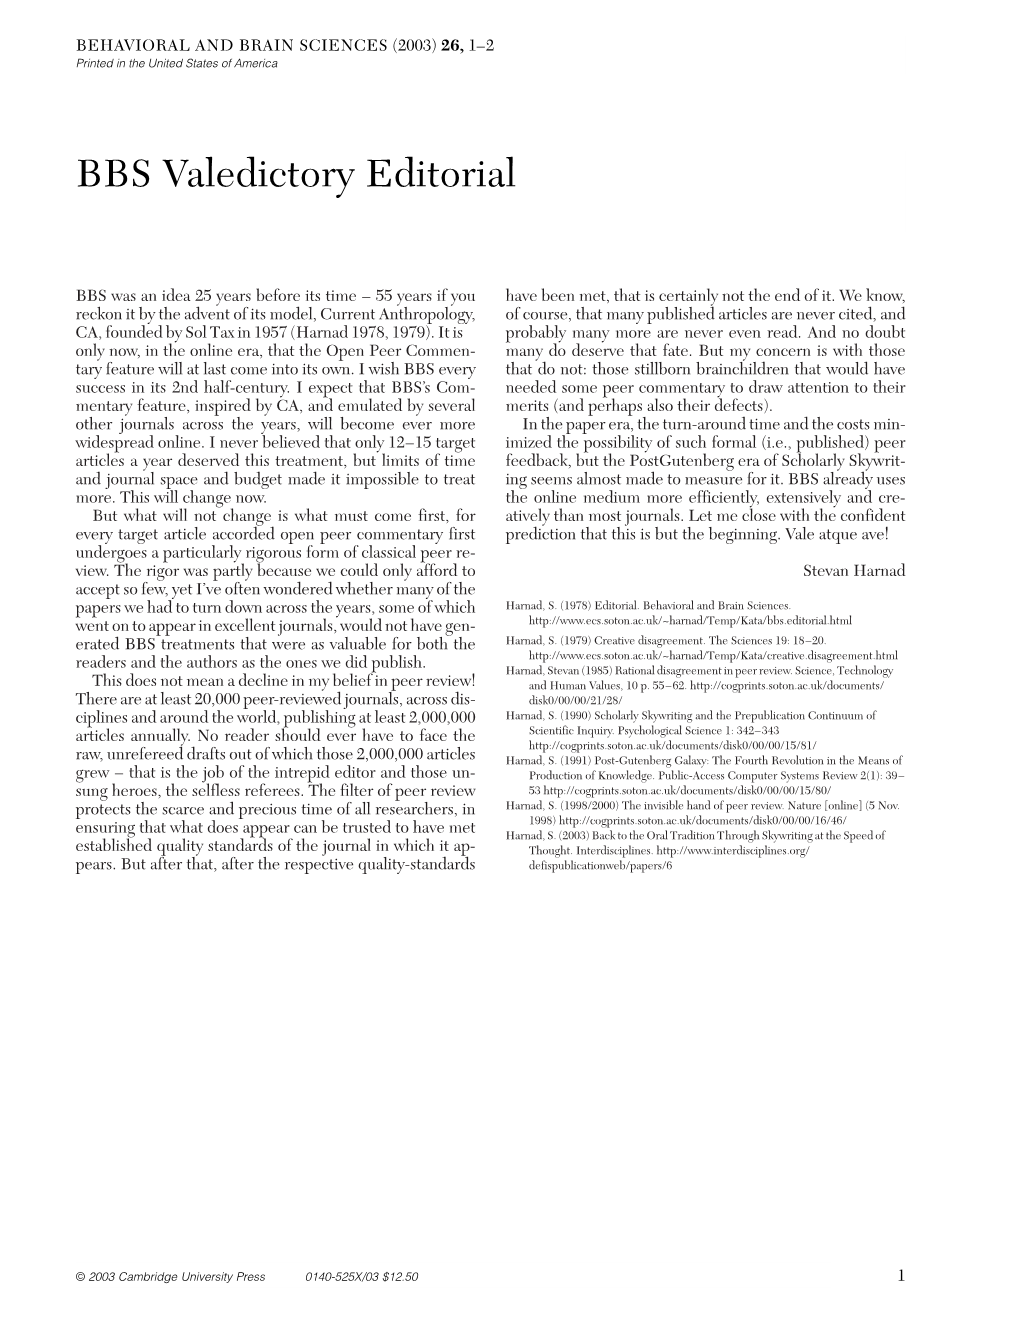 BBS Valedictory Editorial